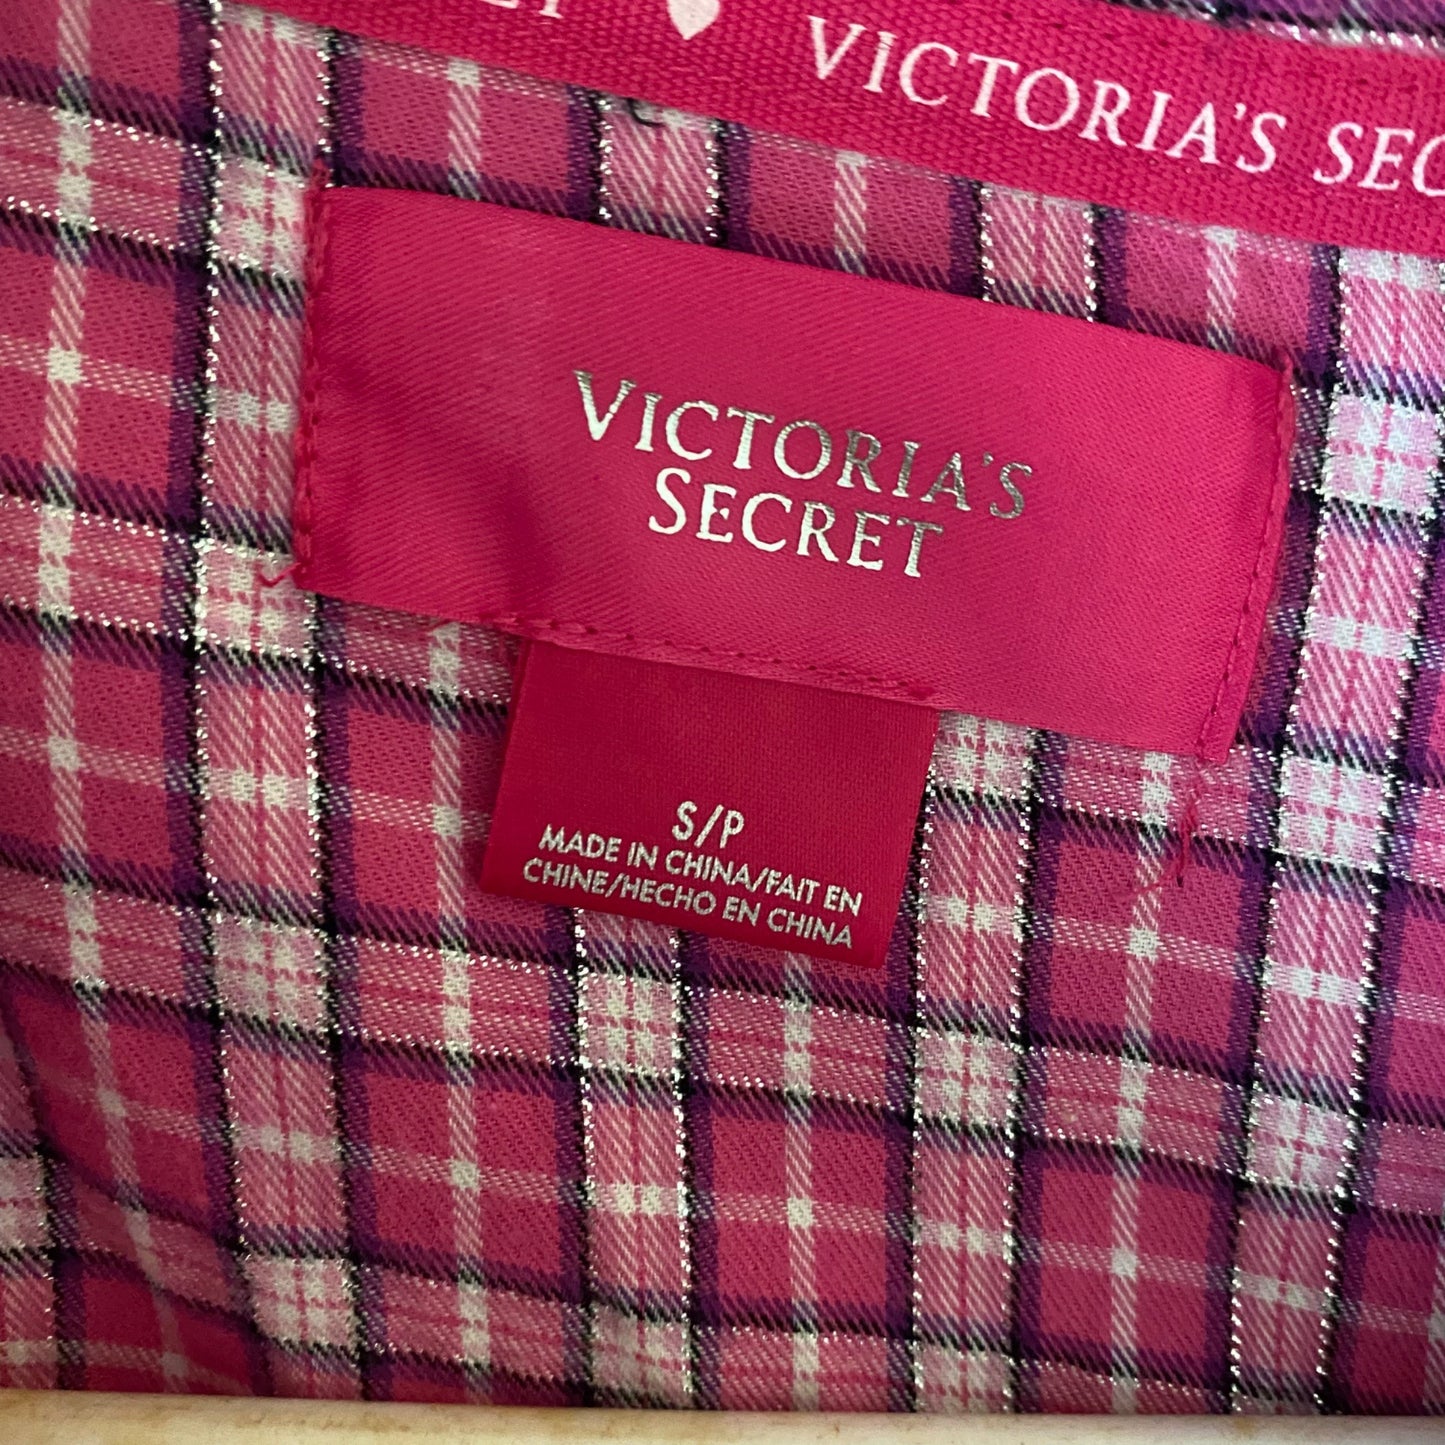 Victoria's Secret sz S/P Long sleeve button down pocket sleep shirt